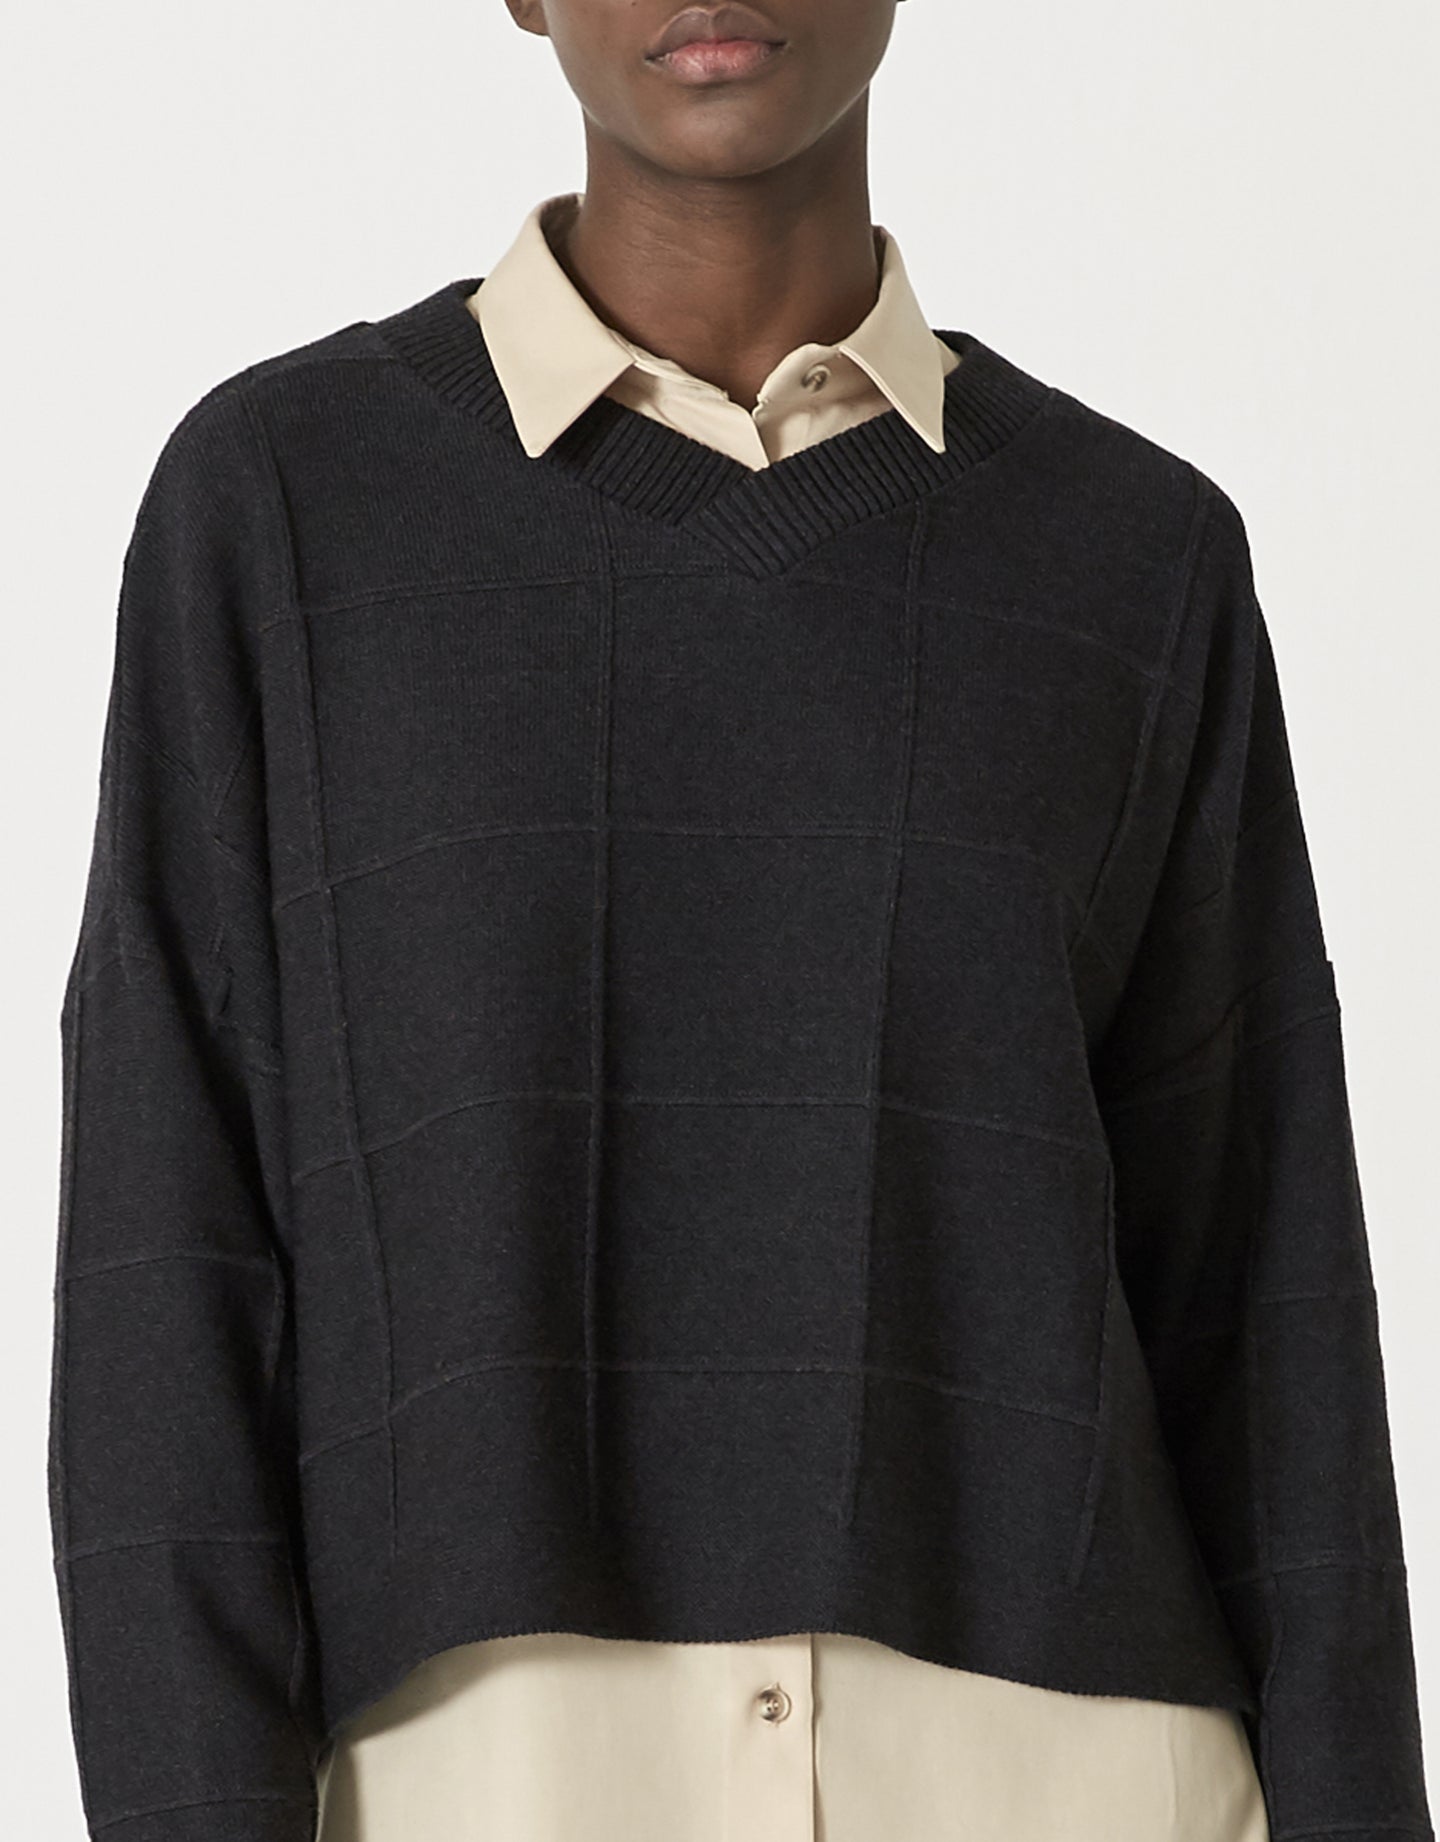 Saito Sweater - Charcoal Merino Wool (M, L)